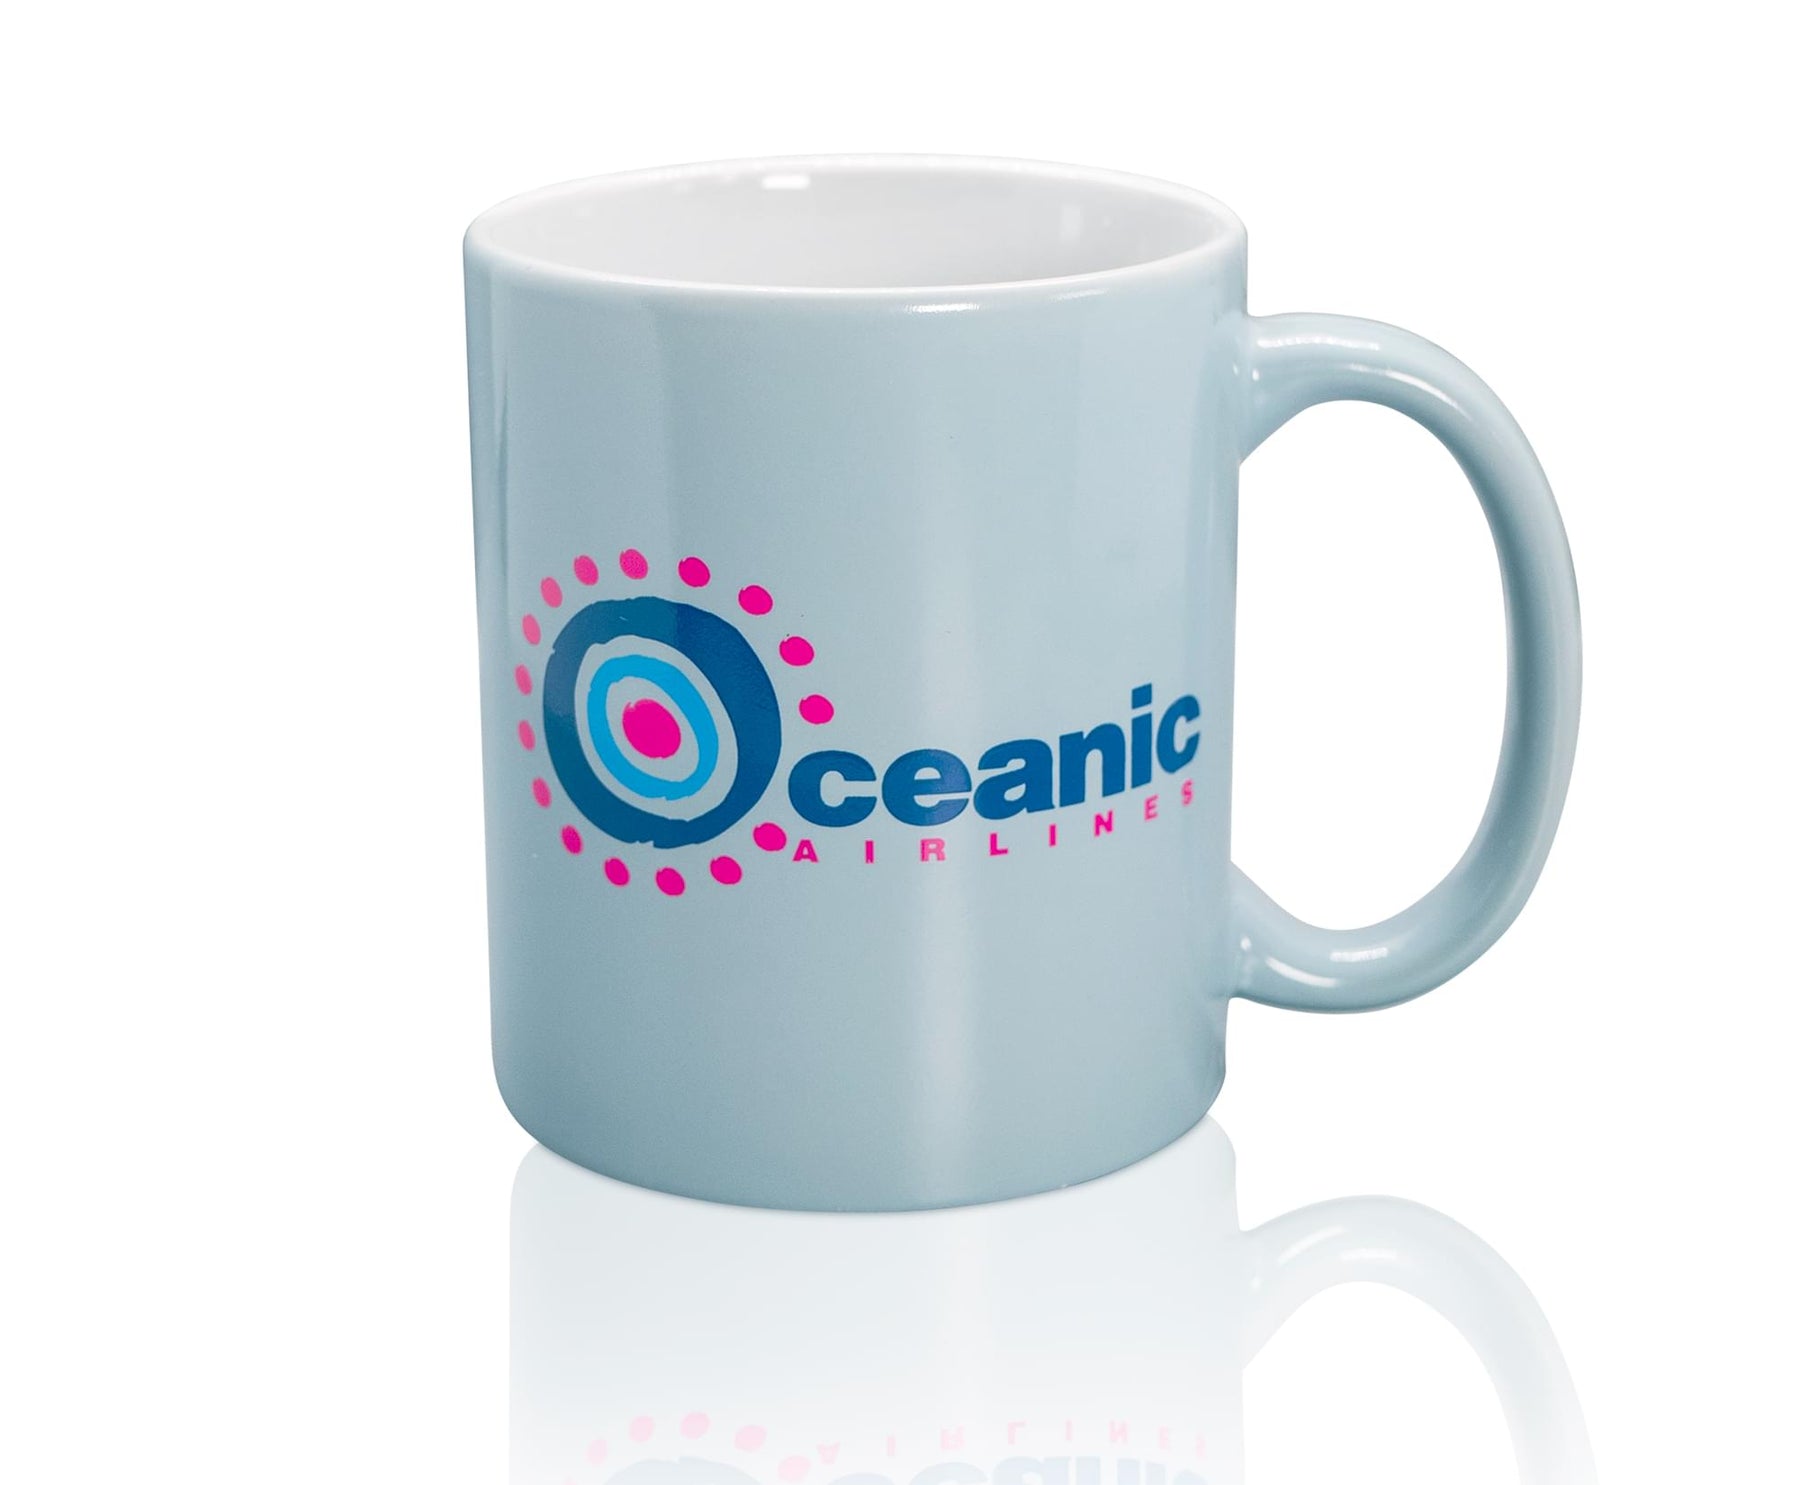 LOST Oceanic Airlines 12oz Ceramic Coffee Mug